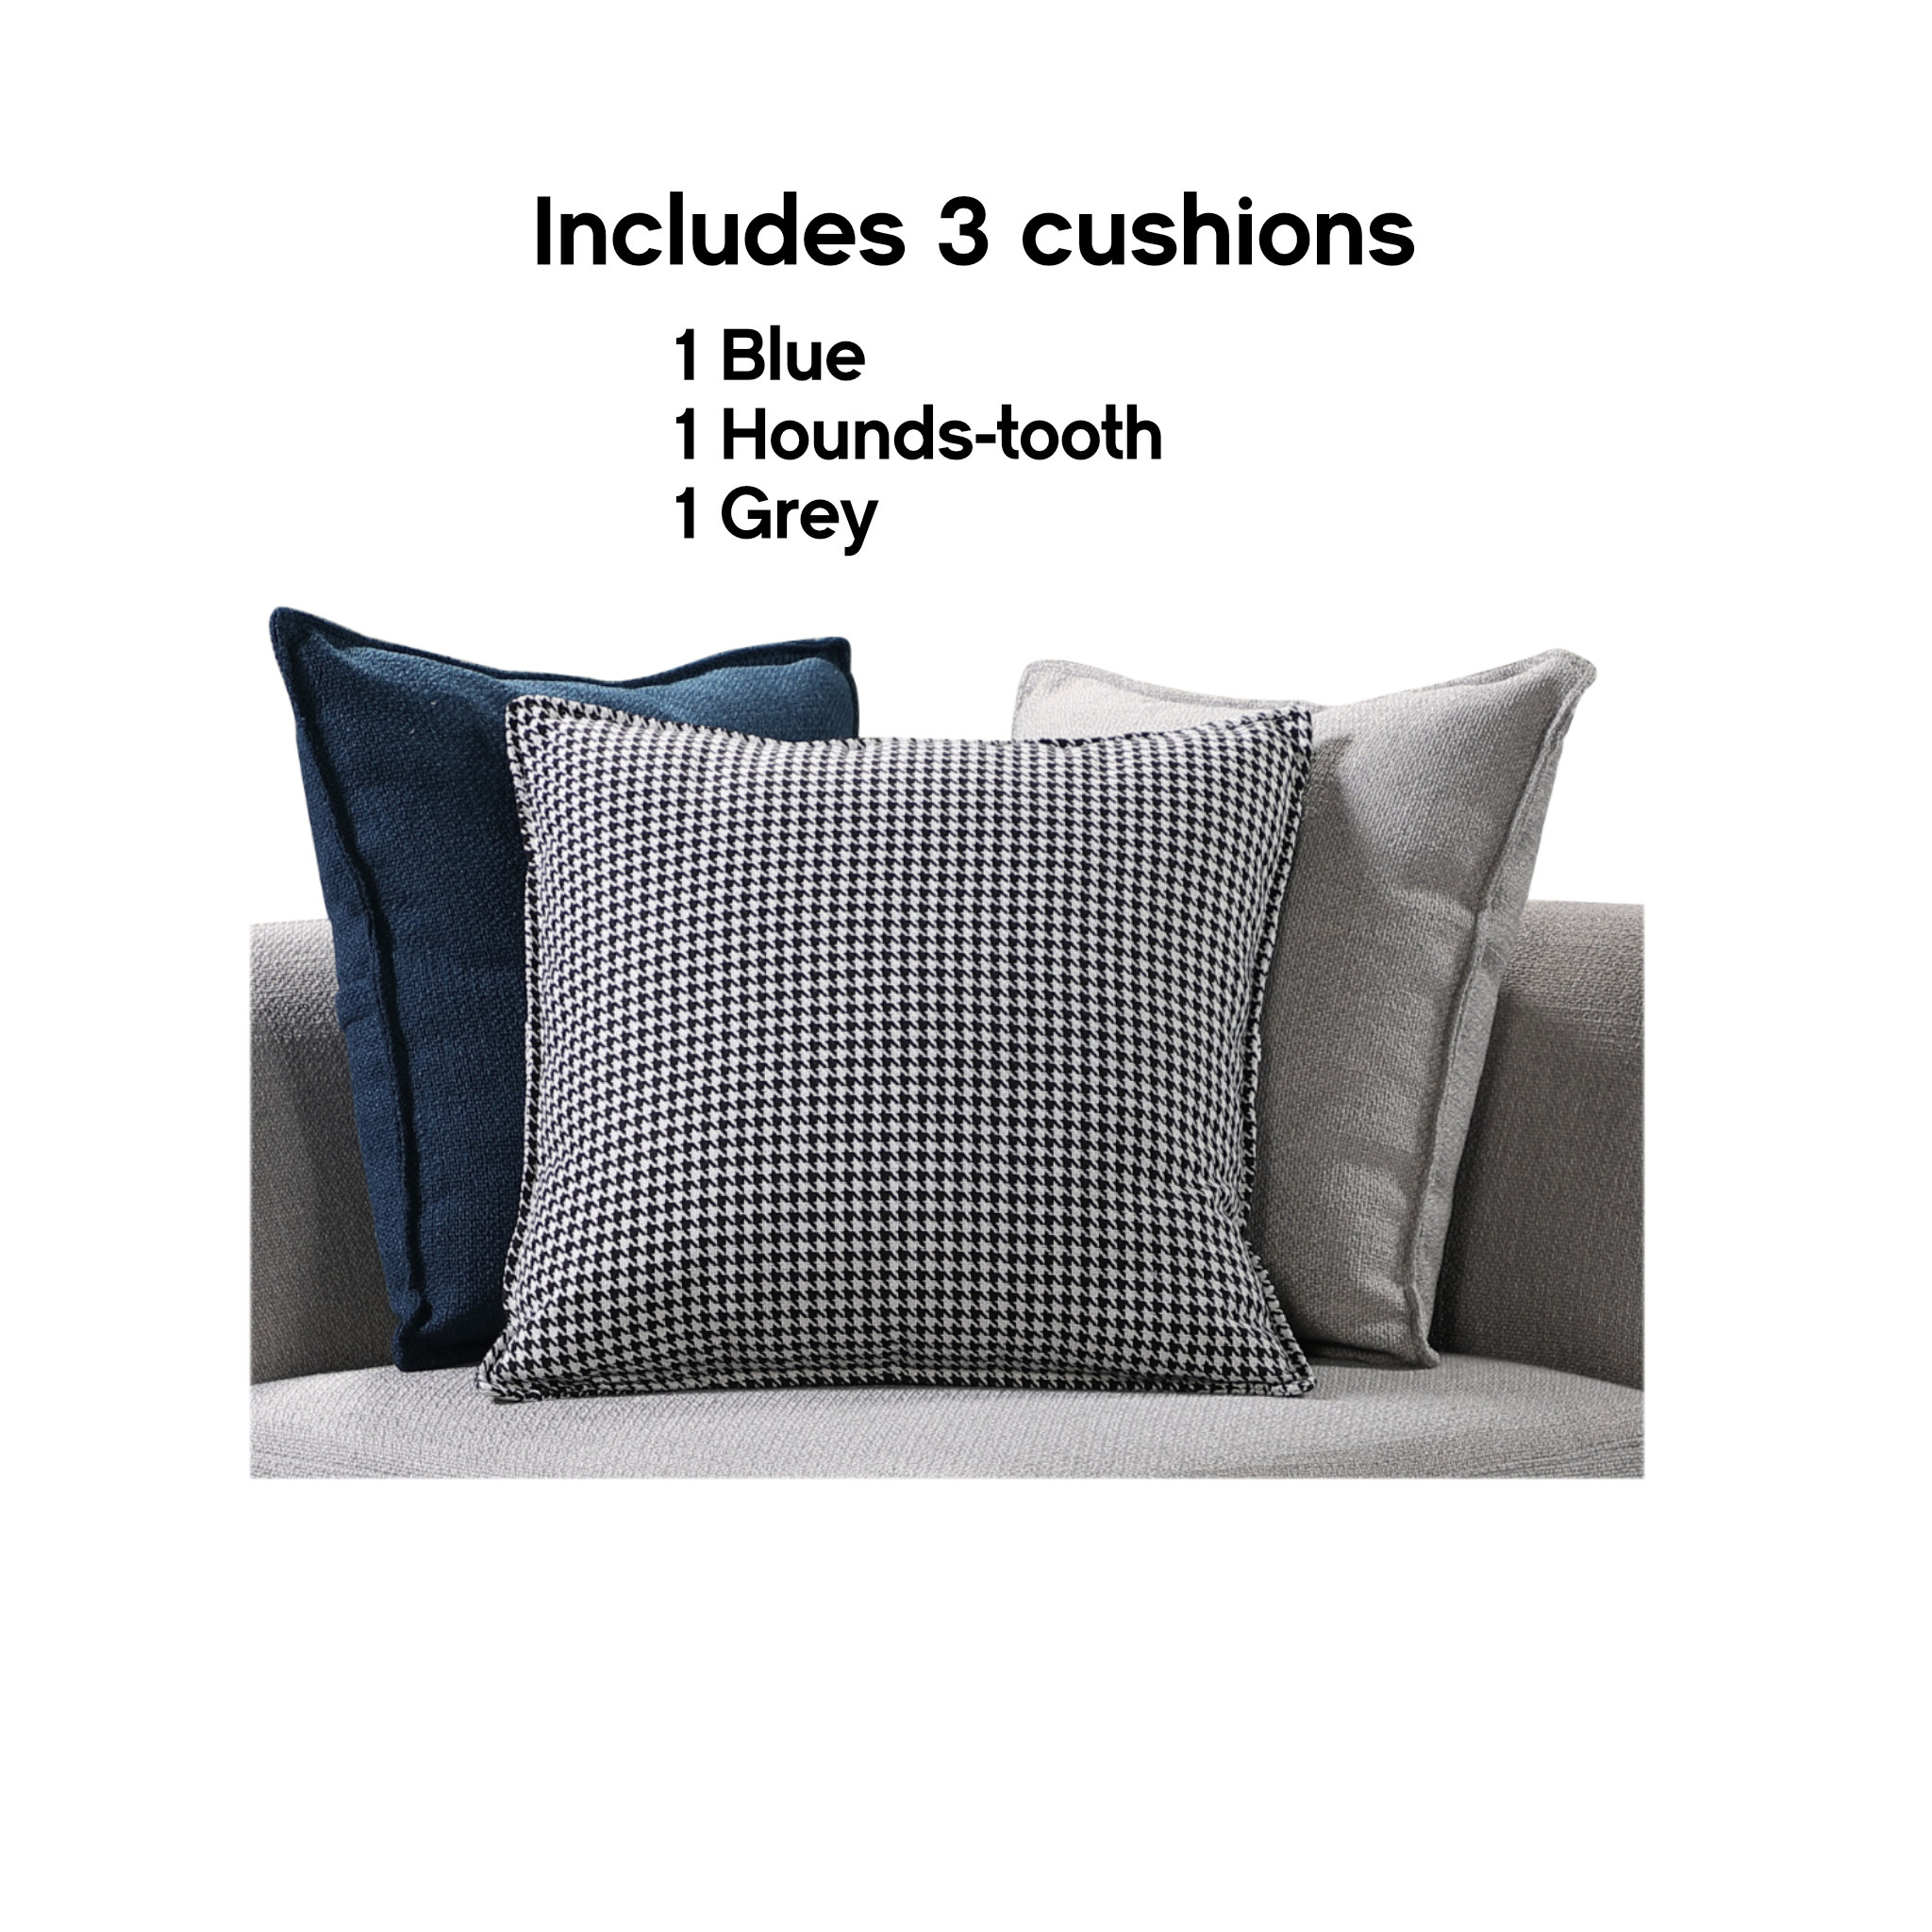 https://expandfurniture.com/wp-content/uploads/2017/05/Each-stratus-seat-module-includes-3-cushions..jpg